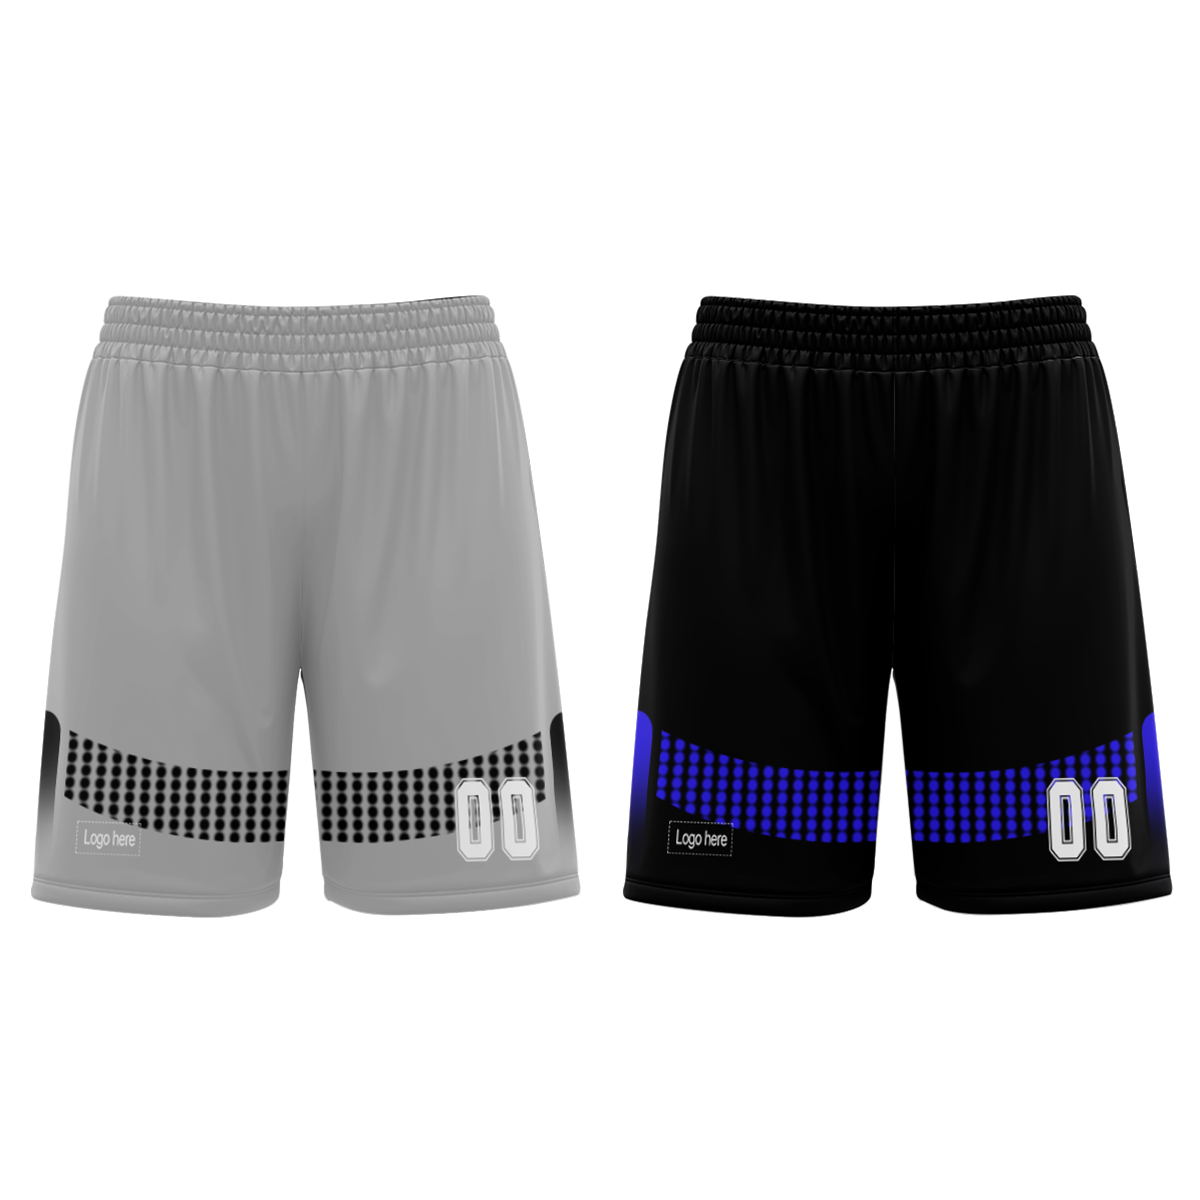 promotion-sales-large-size-sportswear-uniforms-new-design-customized-print-logo-reversible-basketball-jerseys-at-cj-pod-7